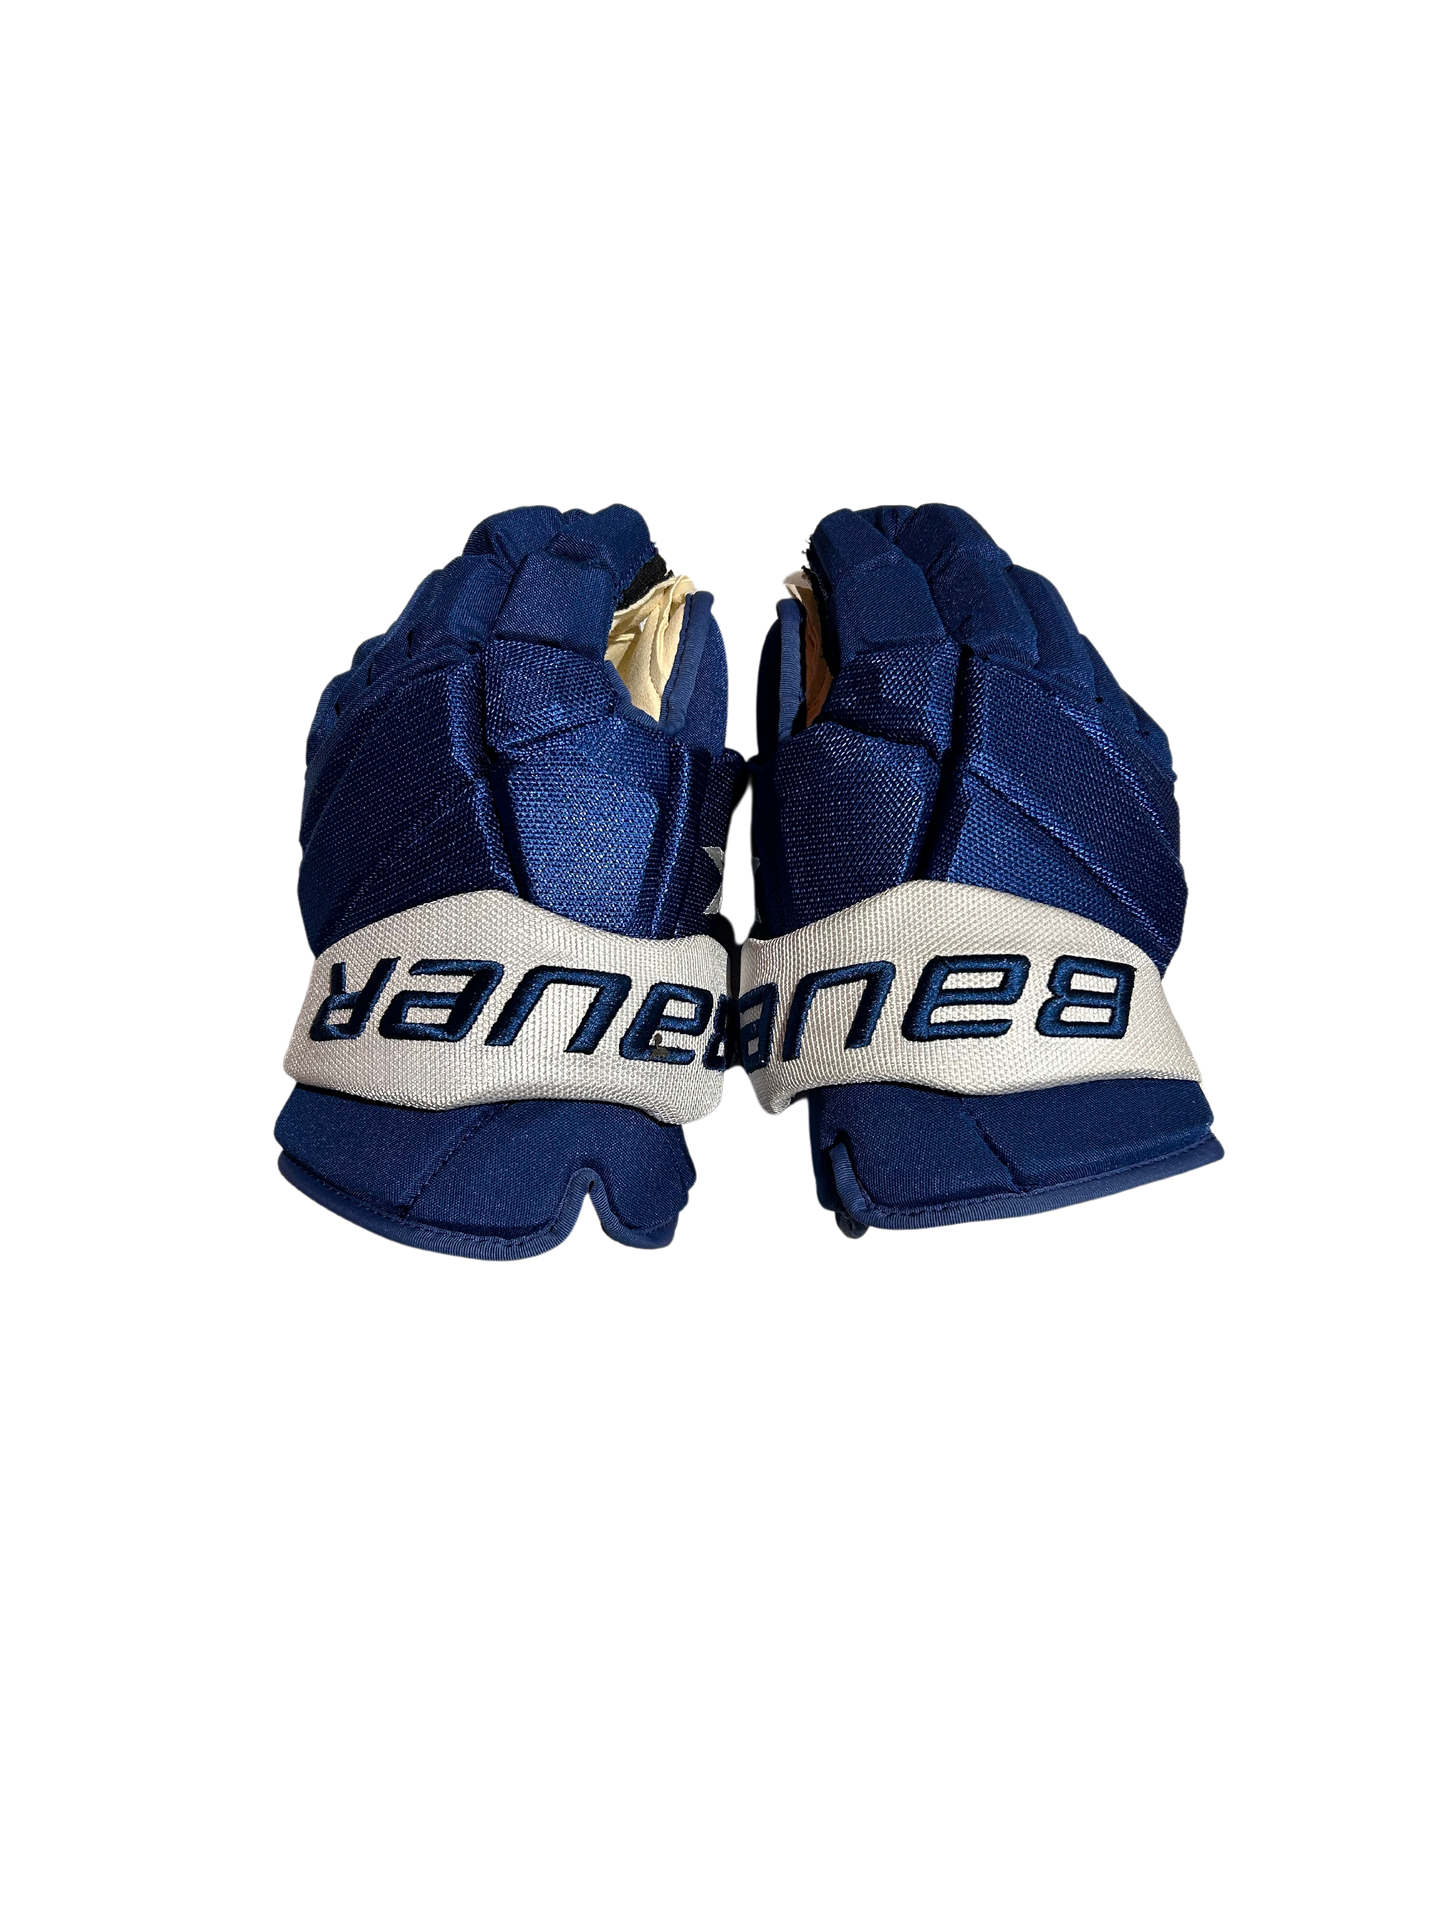 New Blue Colorado Avalanche 14" Bauer Vapor X Gloves (Multiple Players)